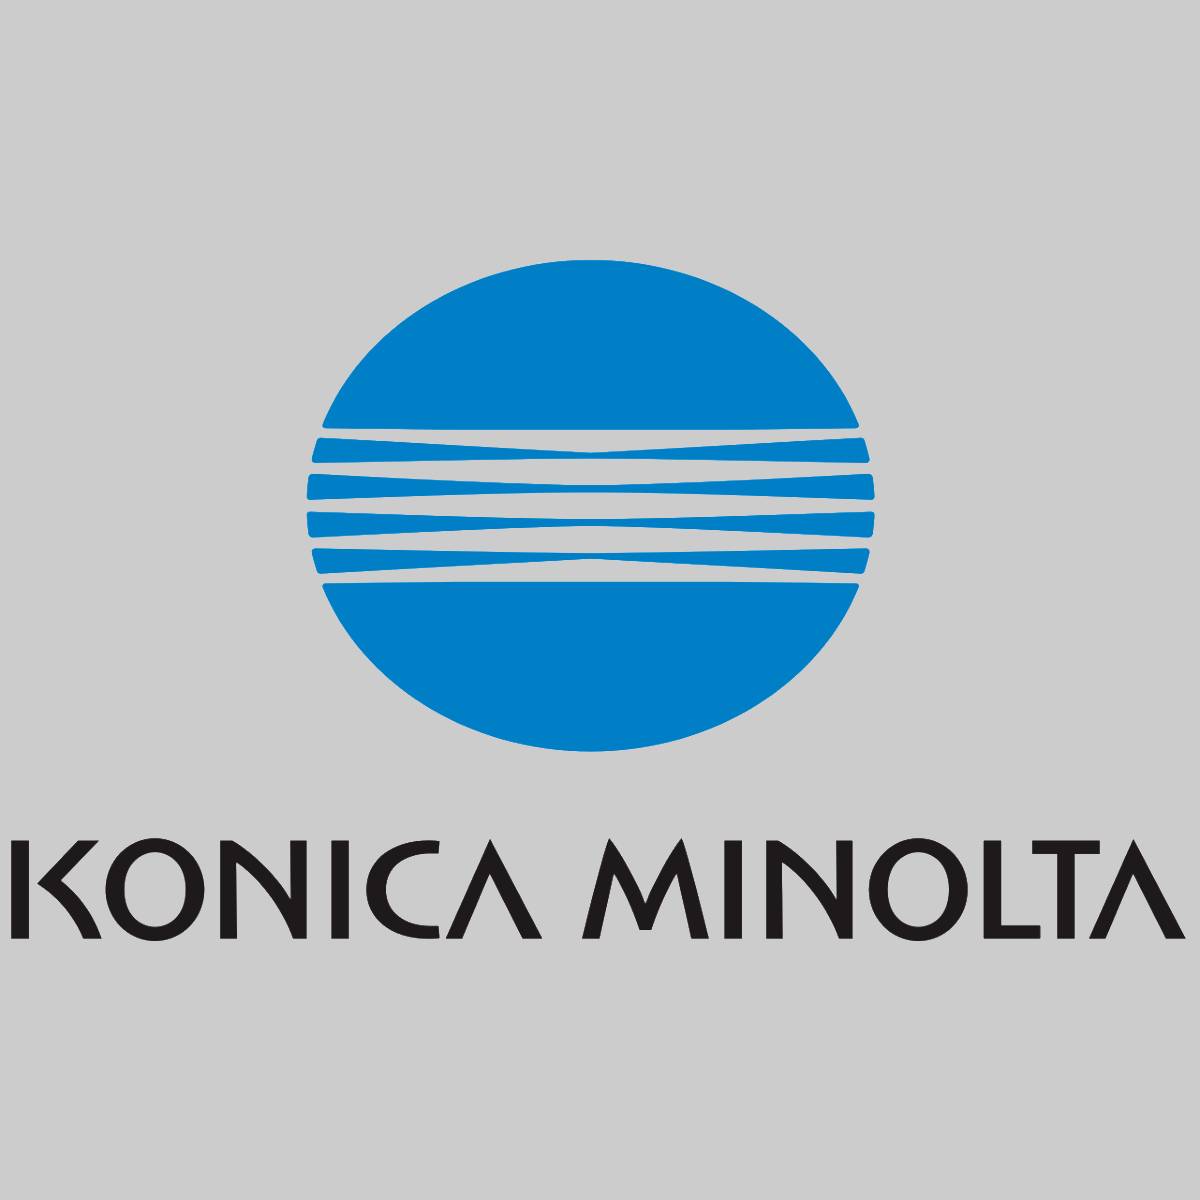 Toner d'origine Konica Minolta TN322 noir A33K050 pour Bizhub 224 e